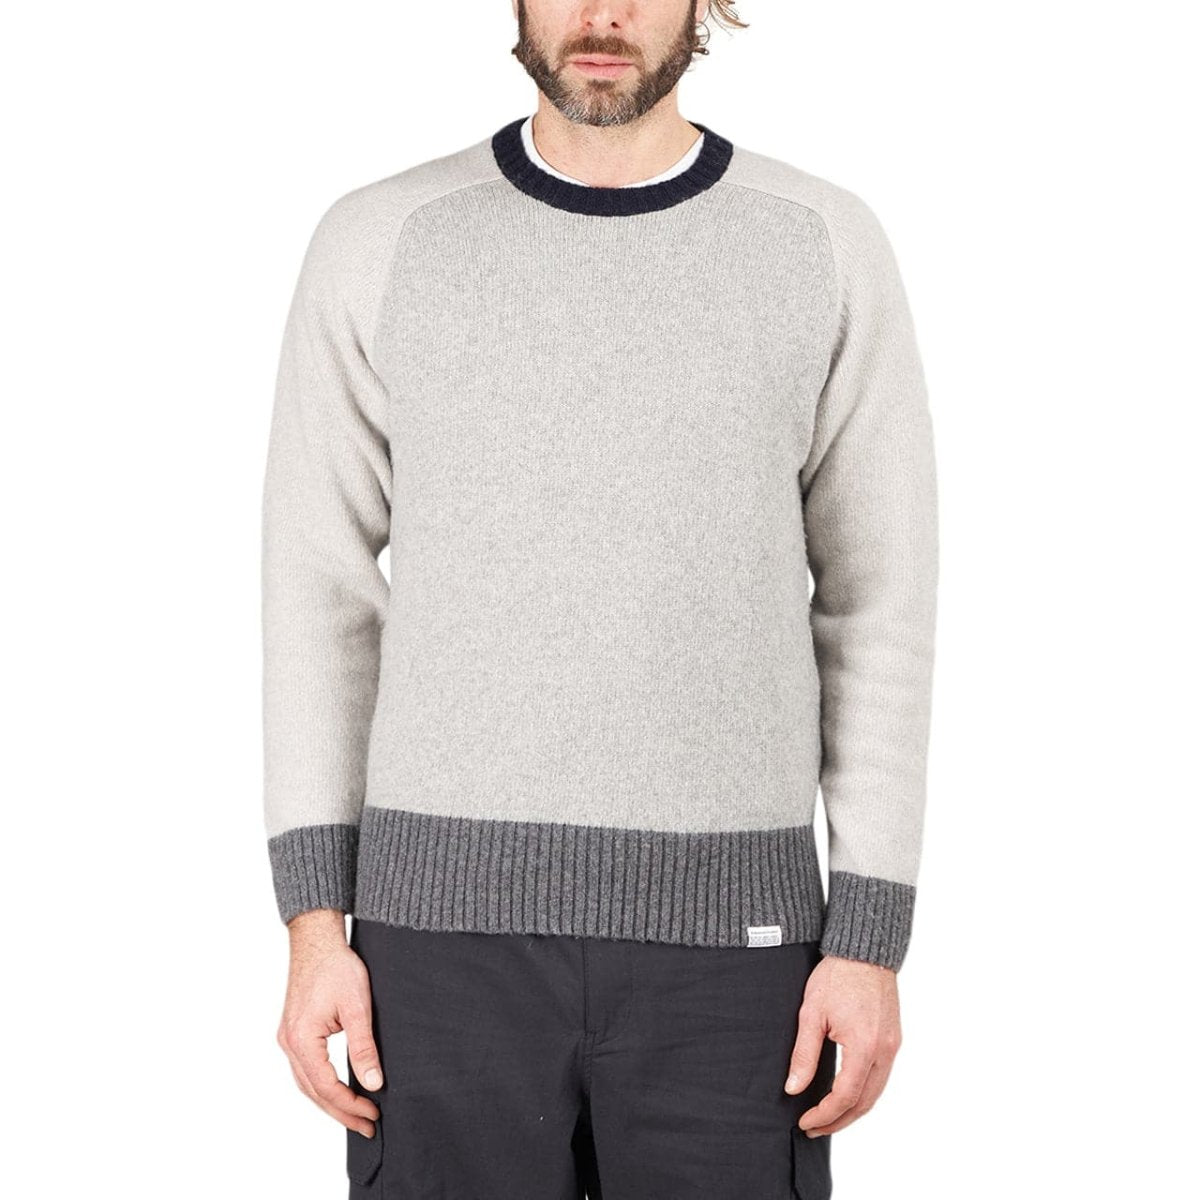 Image of Edmmond Studios Sleeve Sweater (Grey)